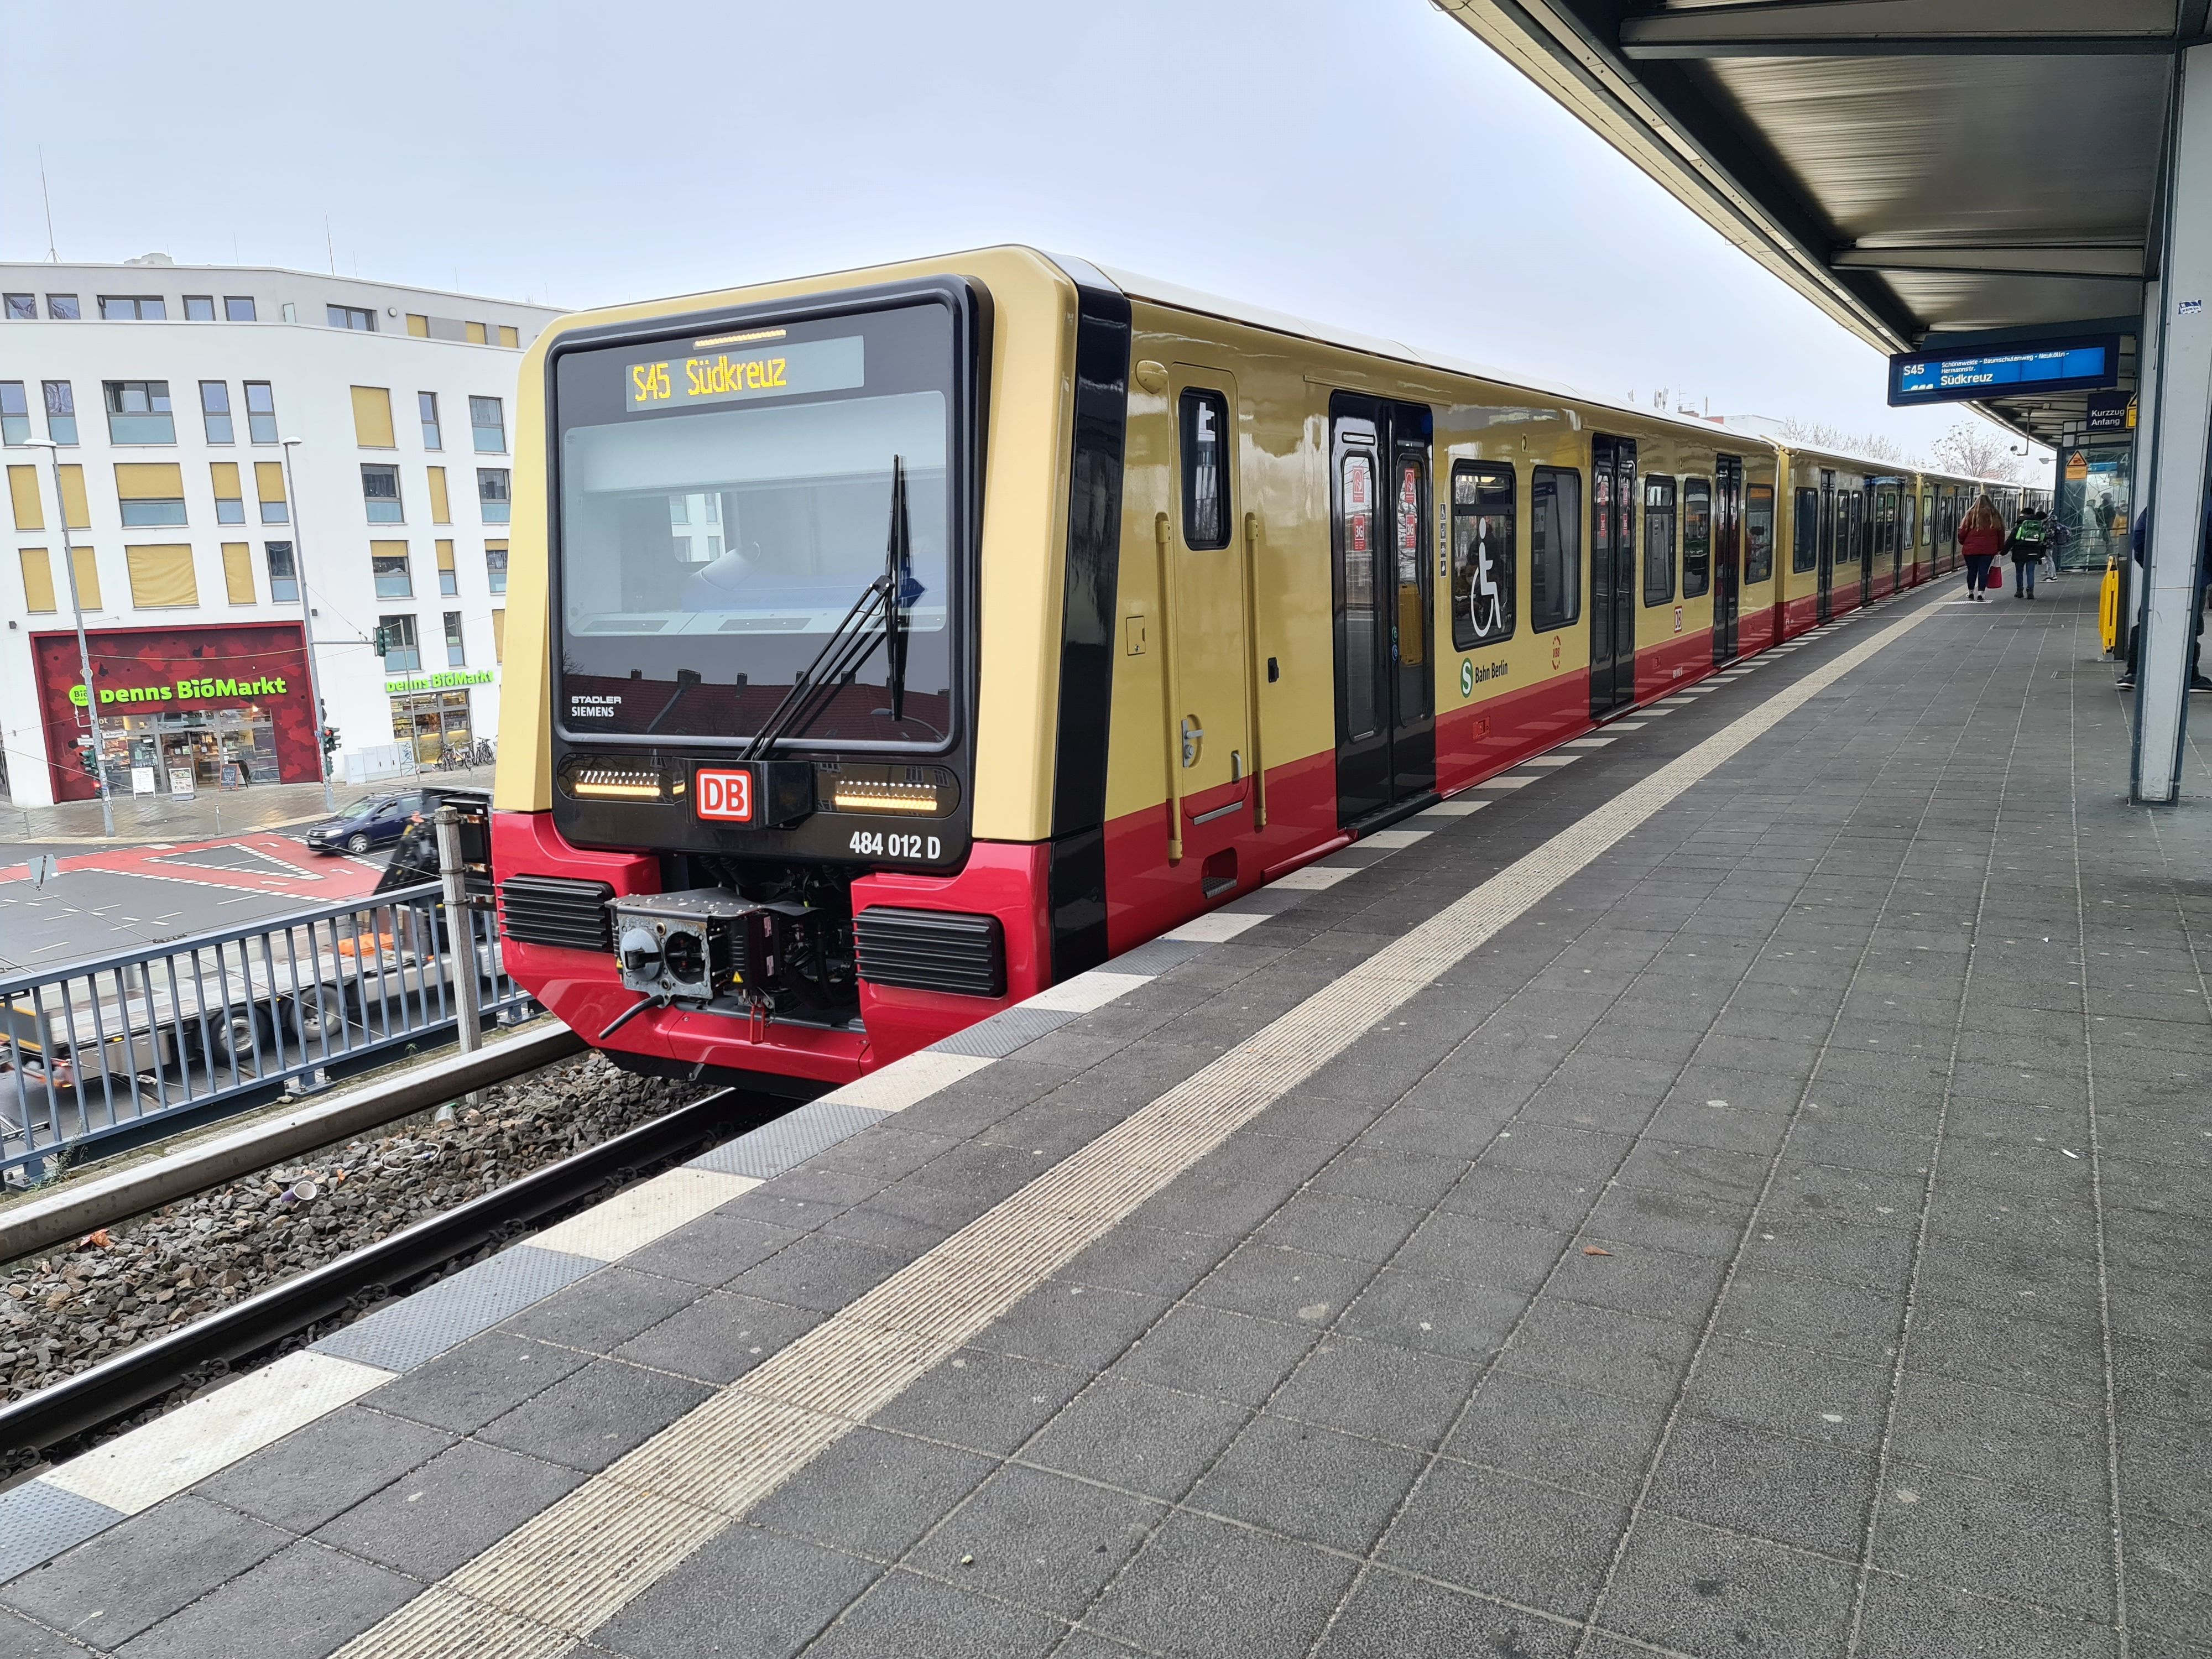 Foto: S-Bahn 484 002 D, Baureihe 483/484, Innotrans, Berlin, September 2018